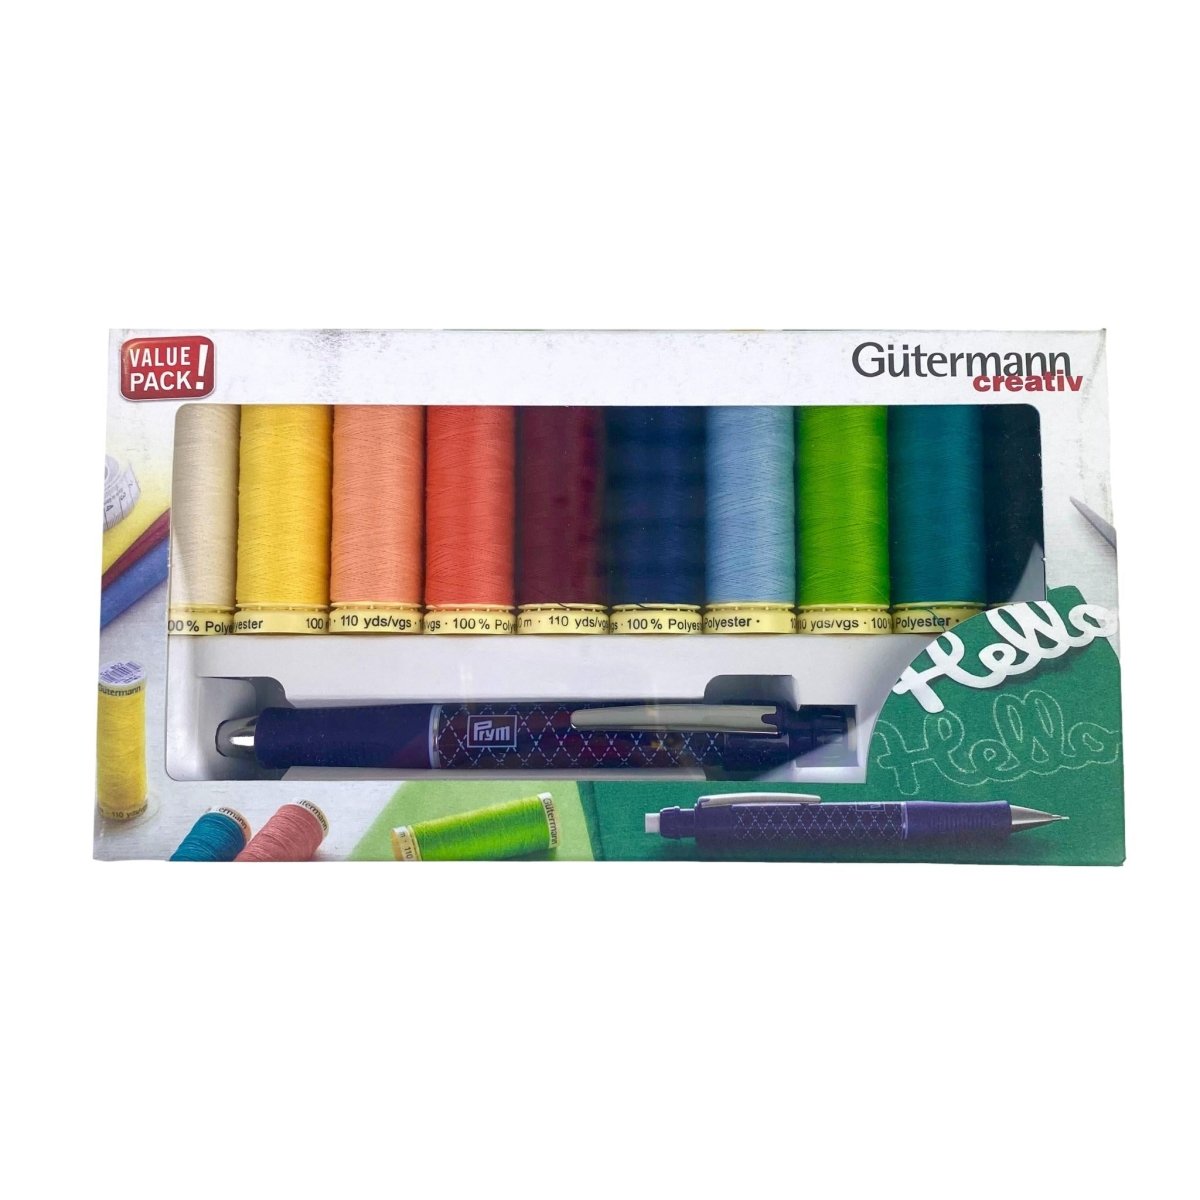 Gutermann Creativ Thread Pack - With Bonus Cartridge Pencil